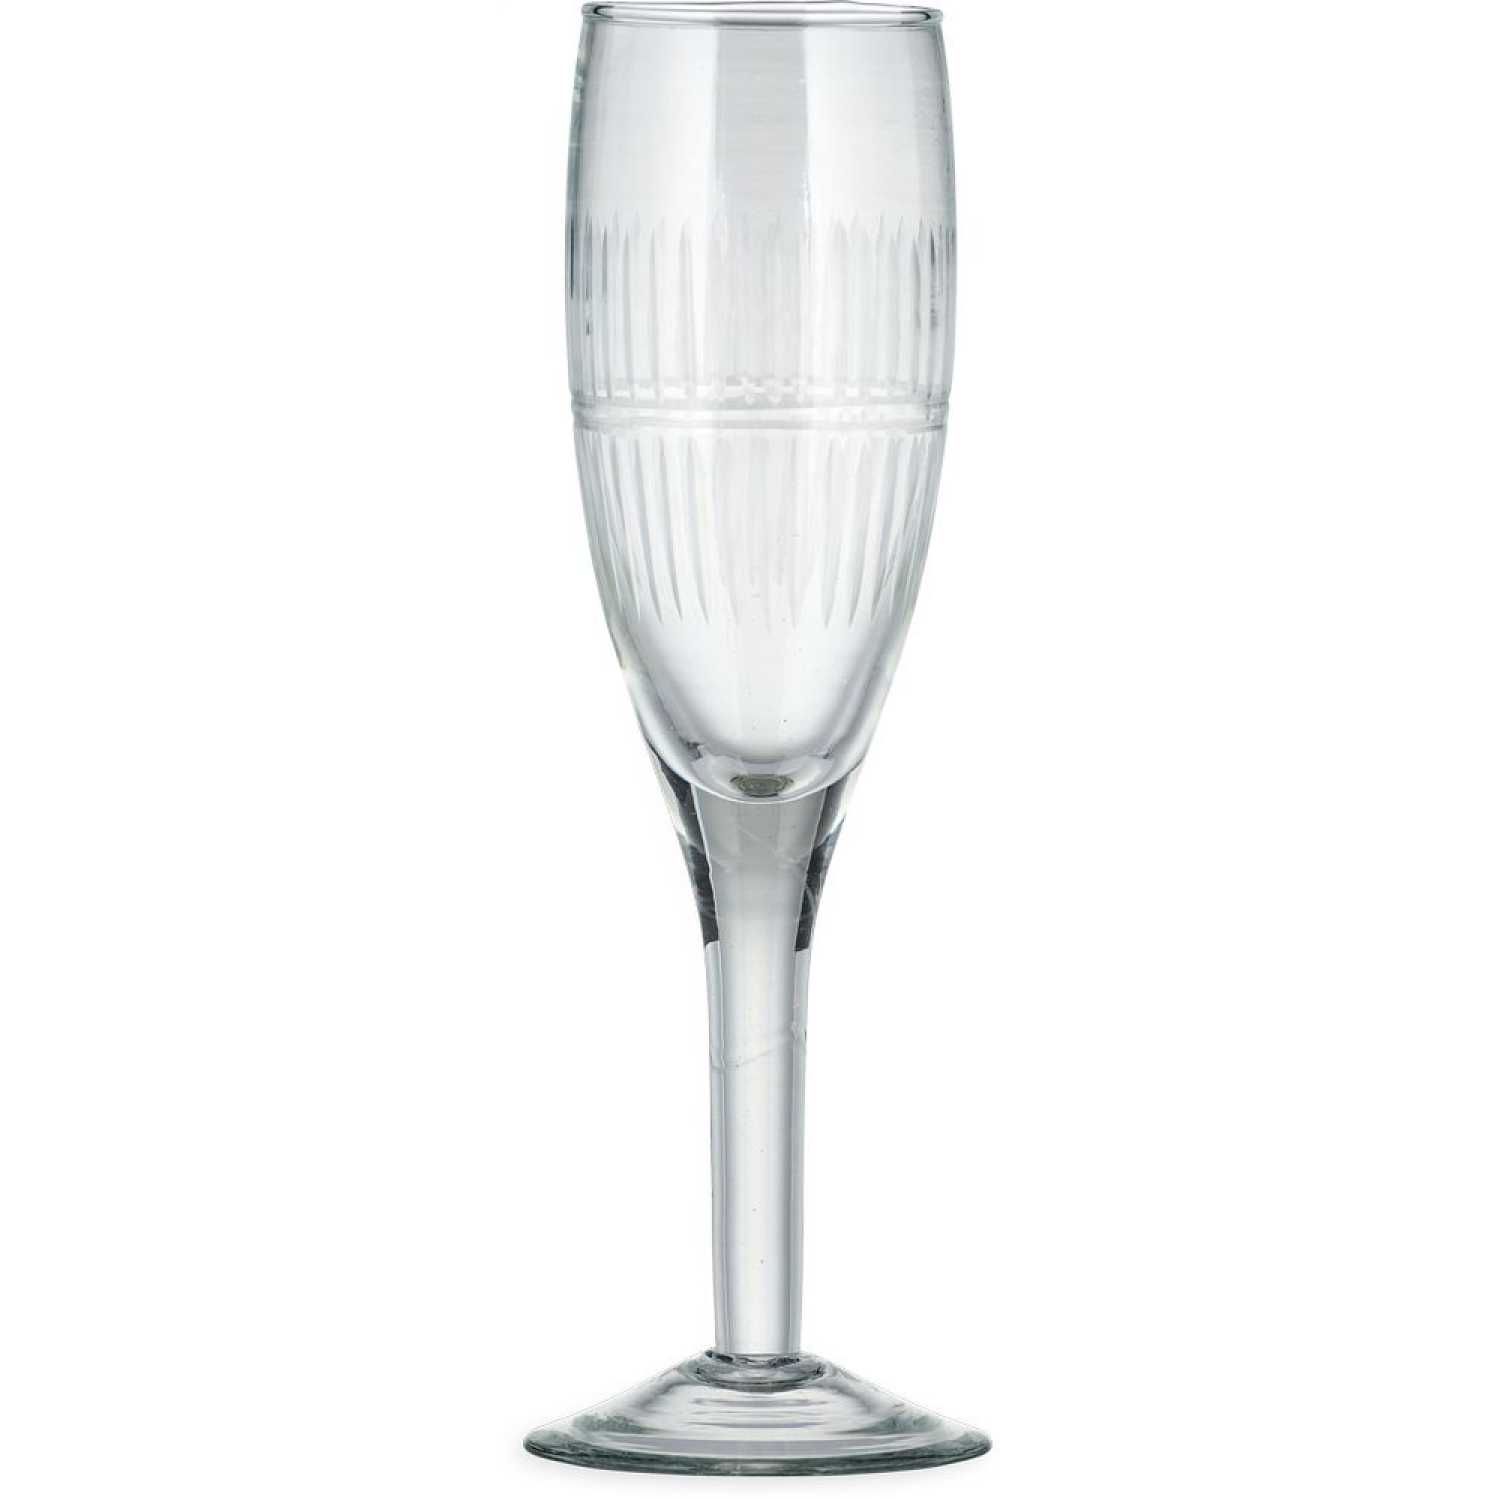 Nkuku Mila Tall Champagne Glasses - Set of 4 - Clear